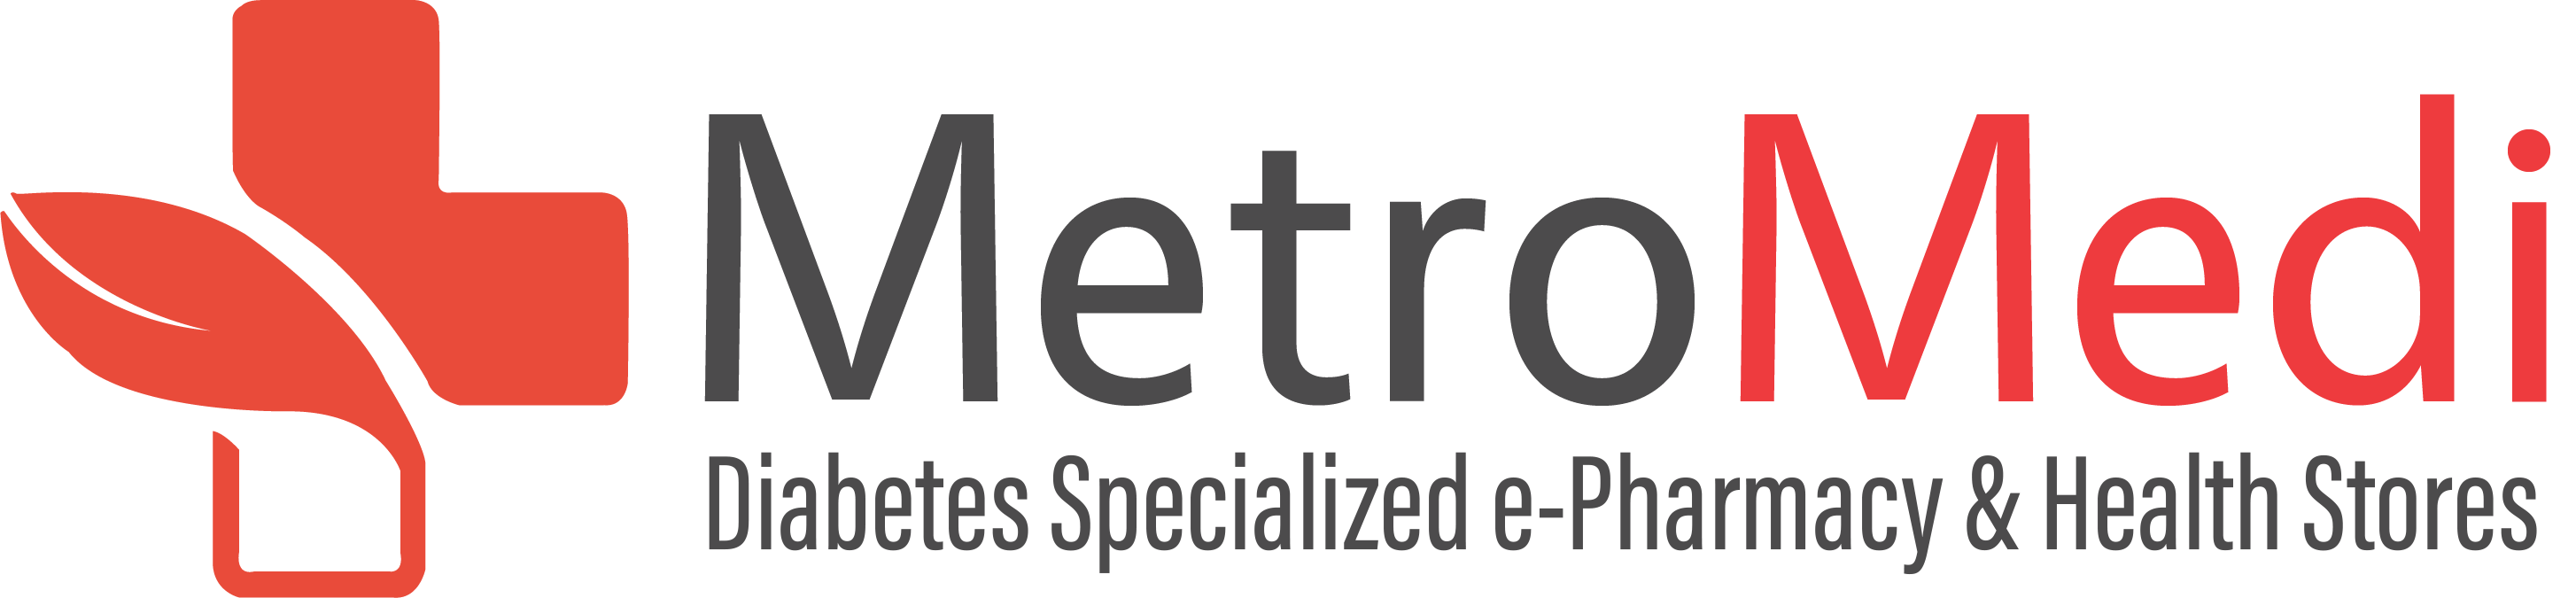 MetroMedi